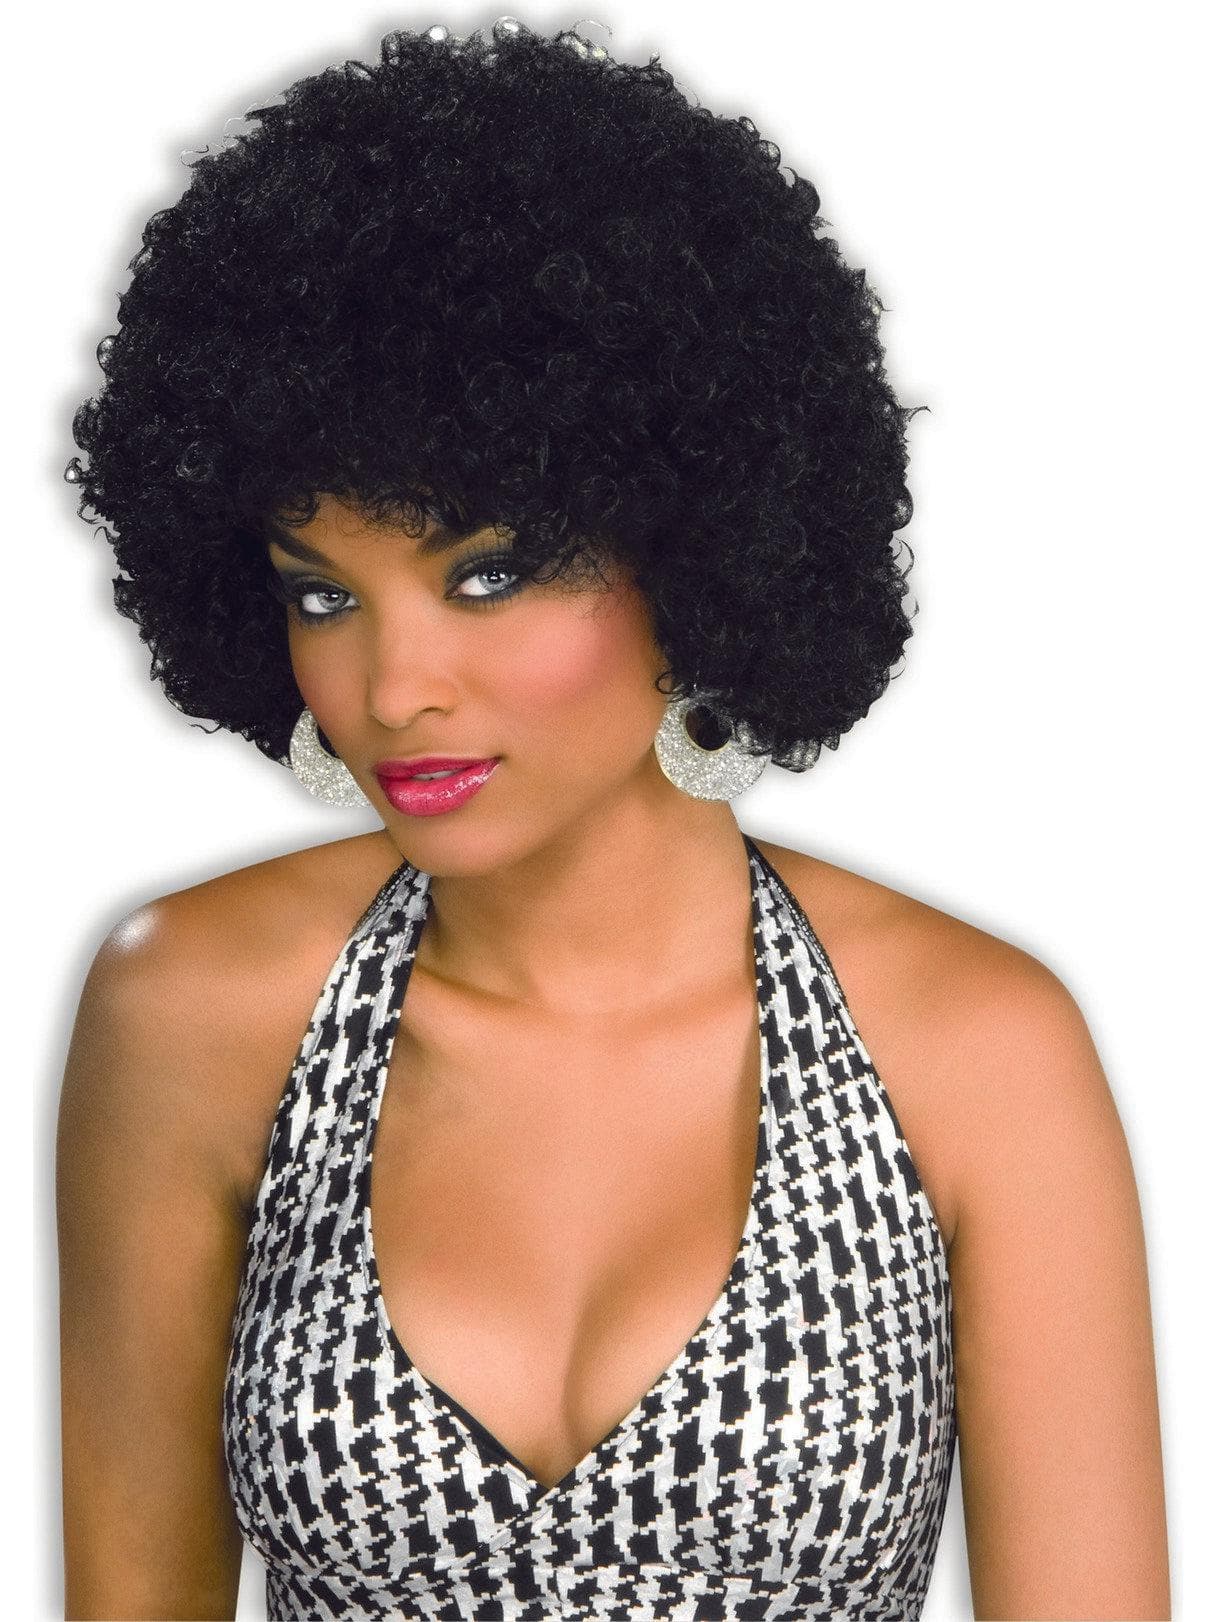 Black Economy Afro Wig - costumes.com